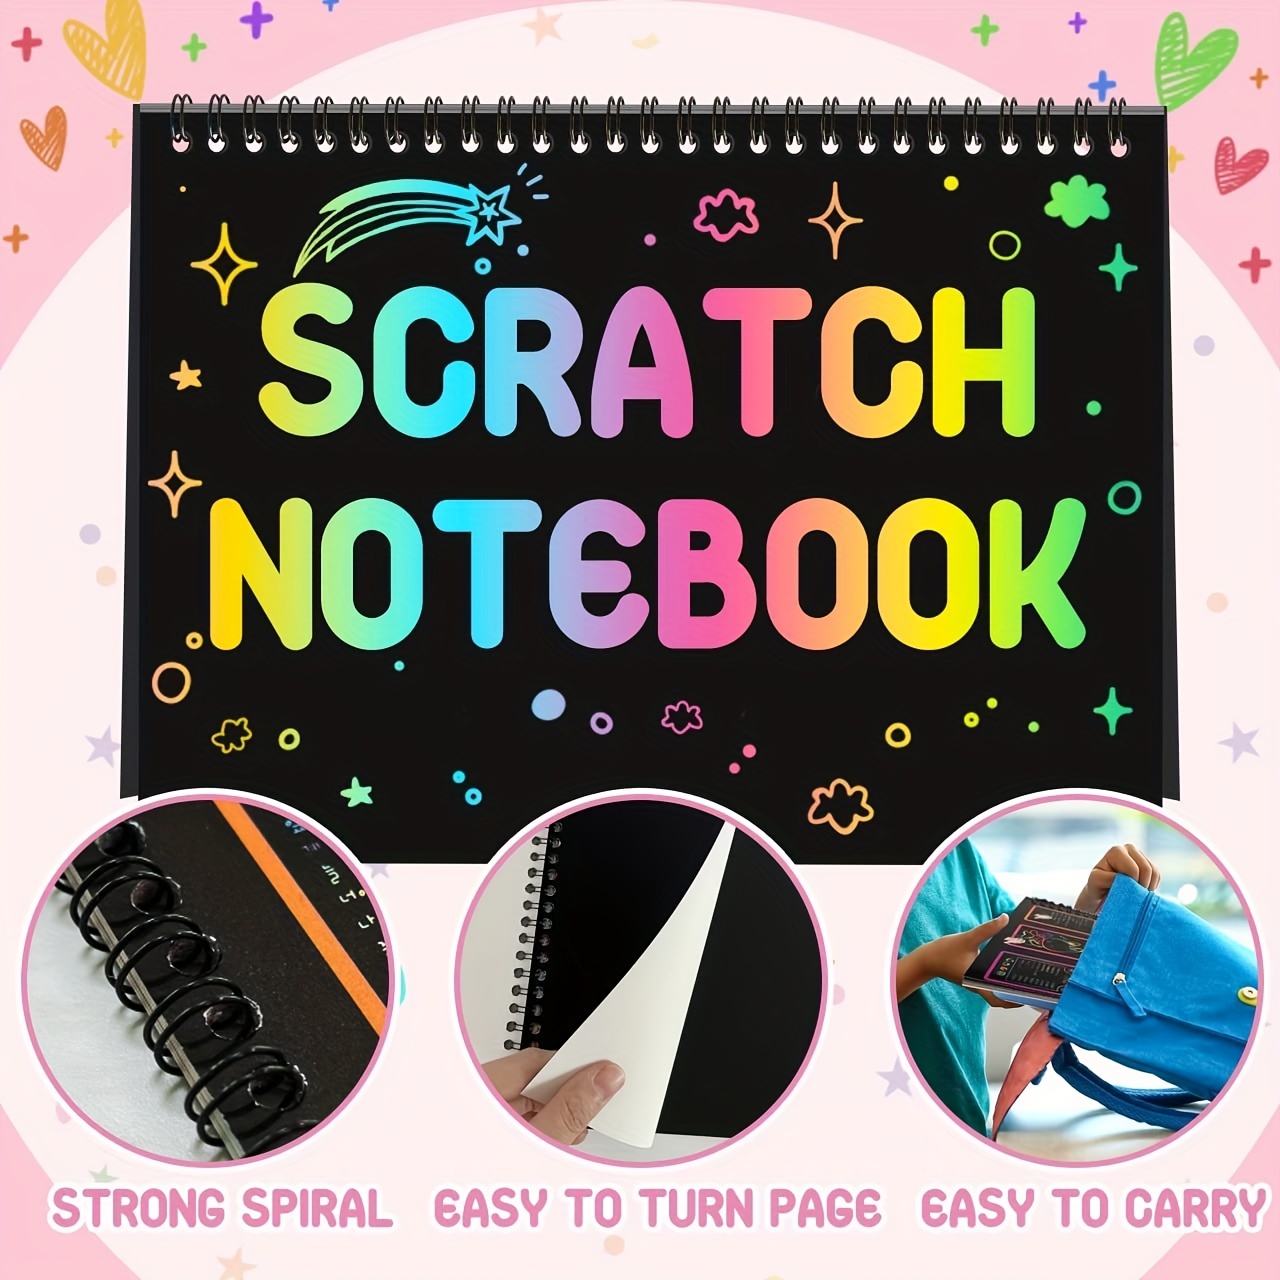 50 Scratch Paper Art Notebooks - Rainbow Scratch Off Color Book